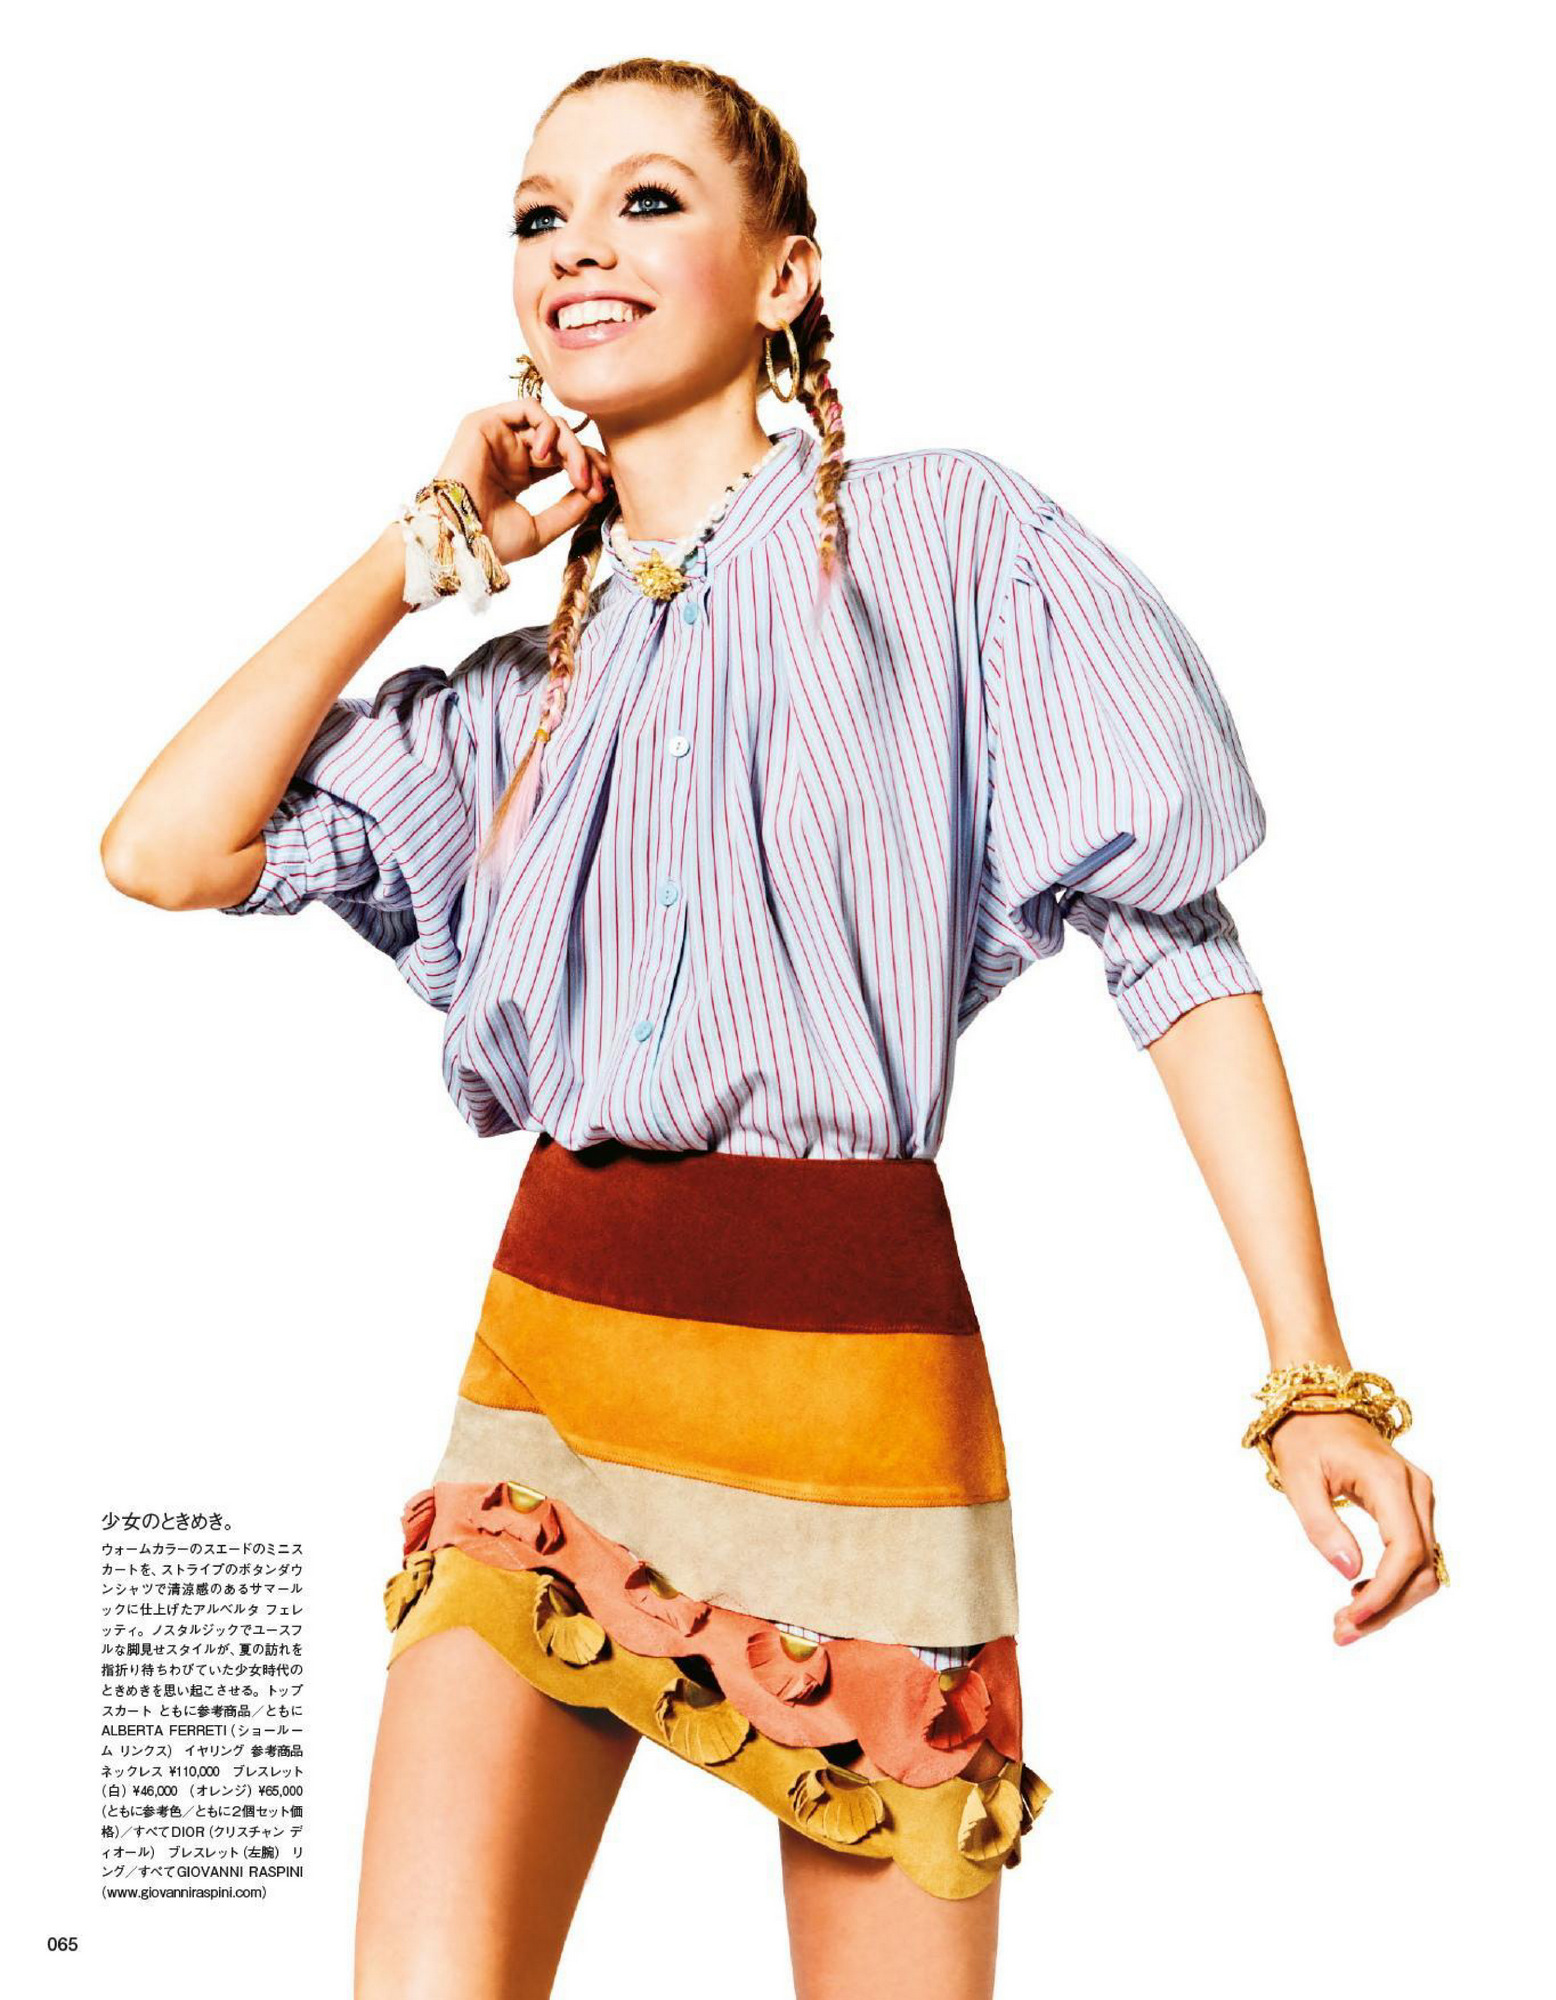 Stella Maxwell Beachin' it For Vogue! - Photo 17